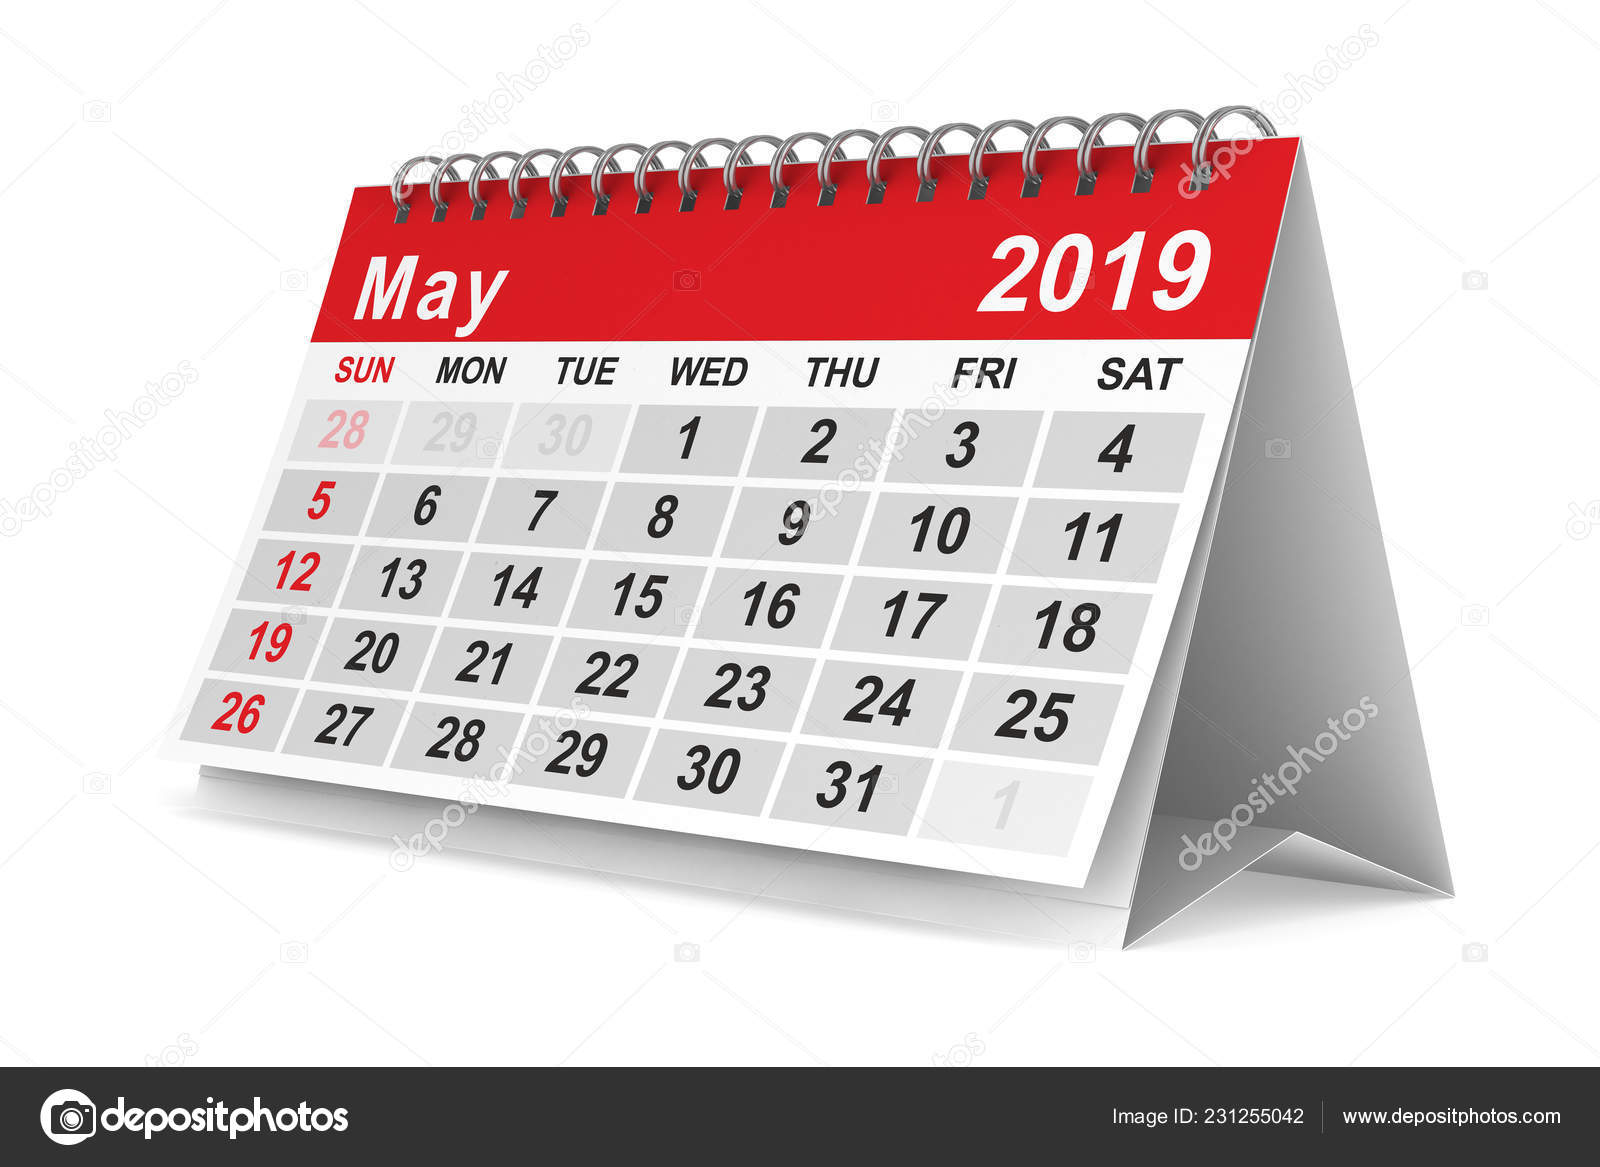 depositphotos 231255042 stock photo 2019 year calendar may isolated